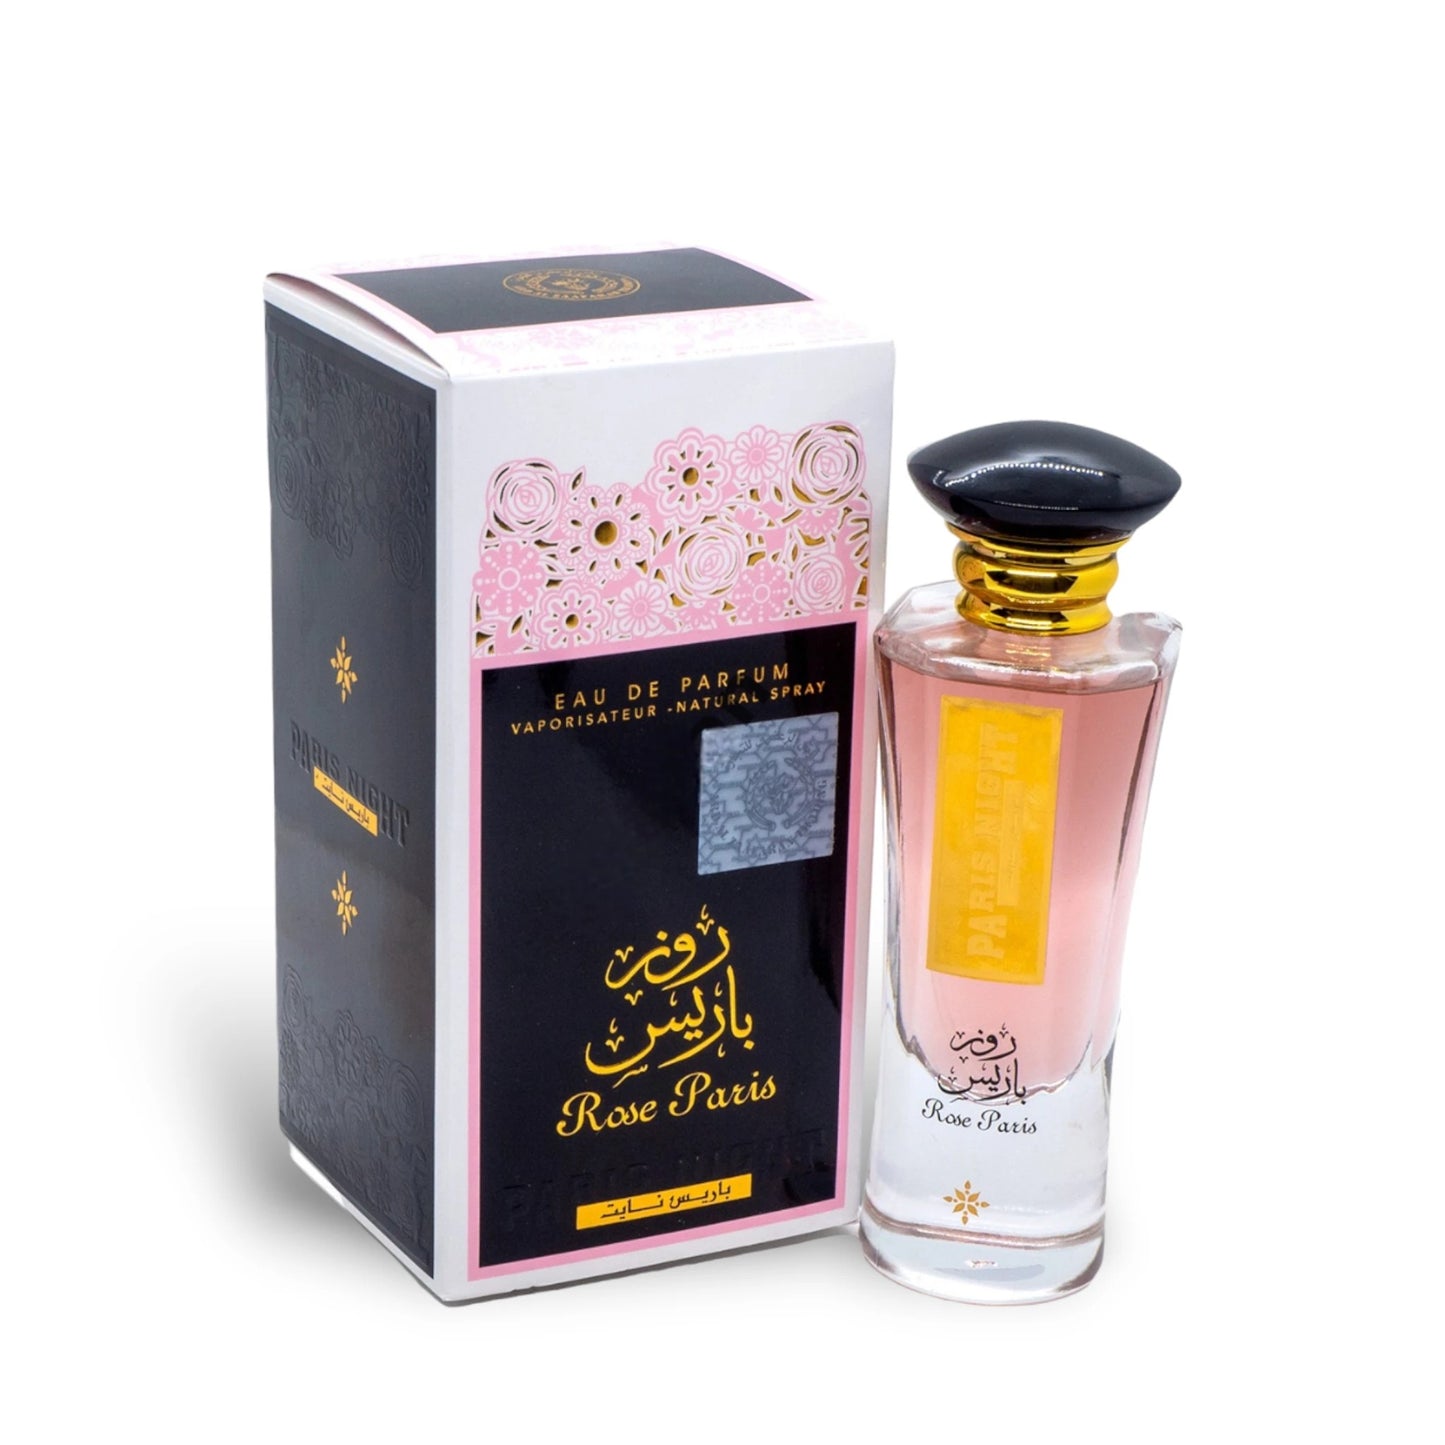 Rose Paris Night 65ml Eau De Parfum Ard al zafraan